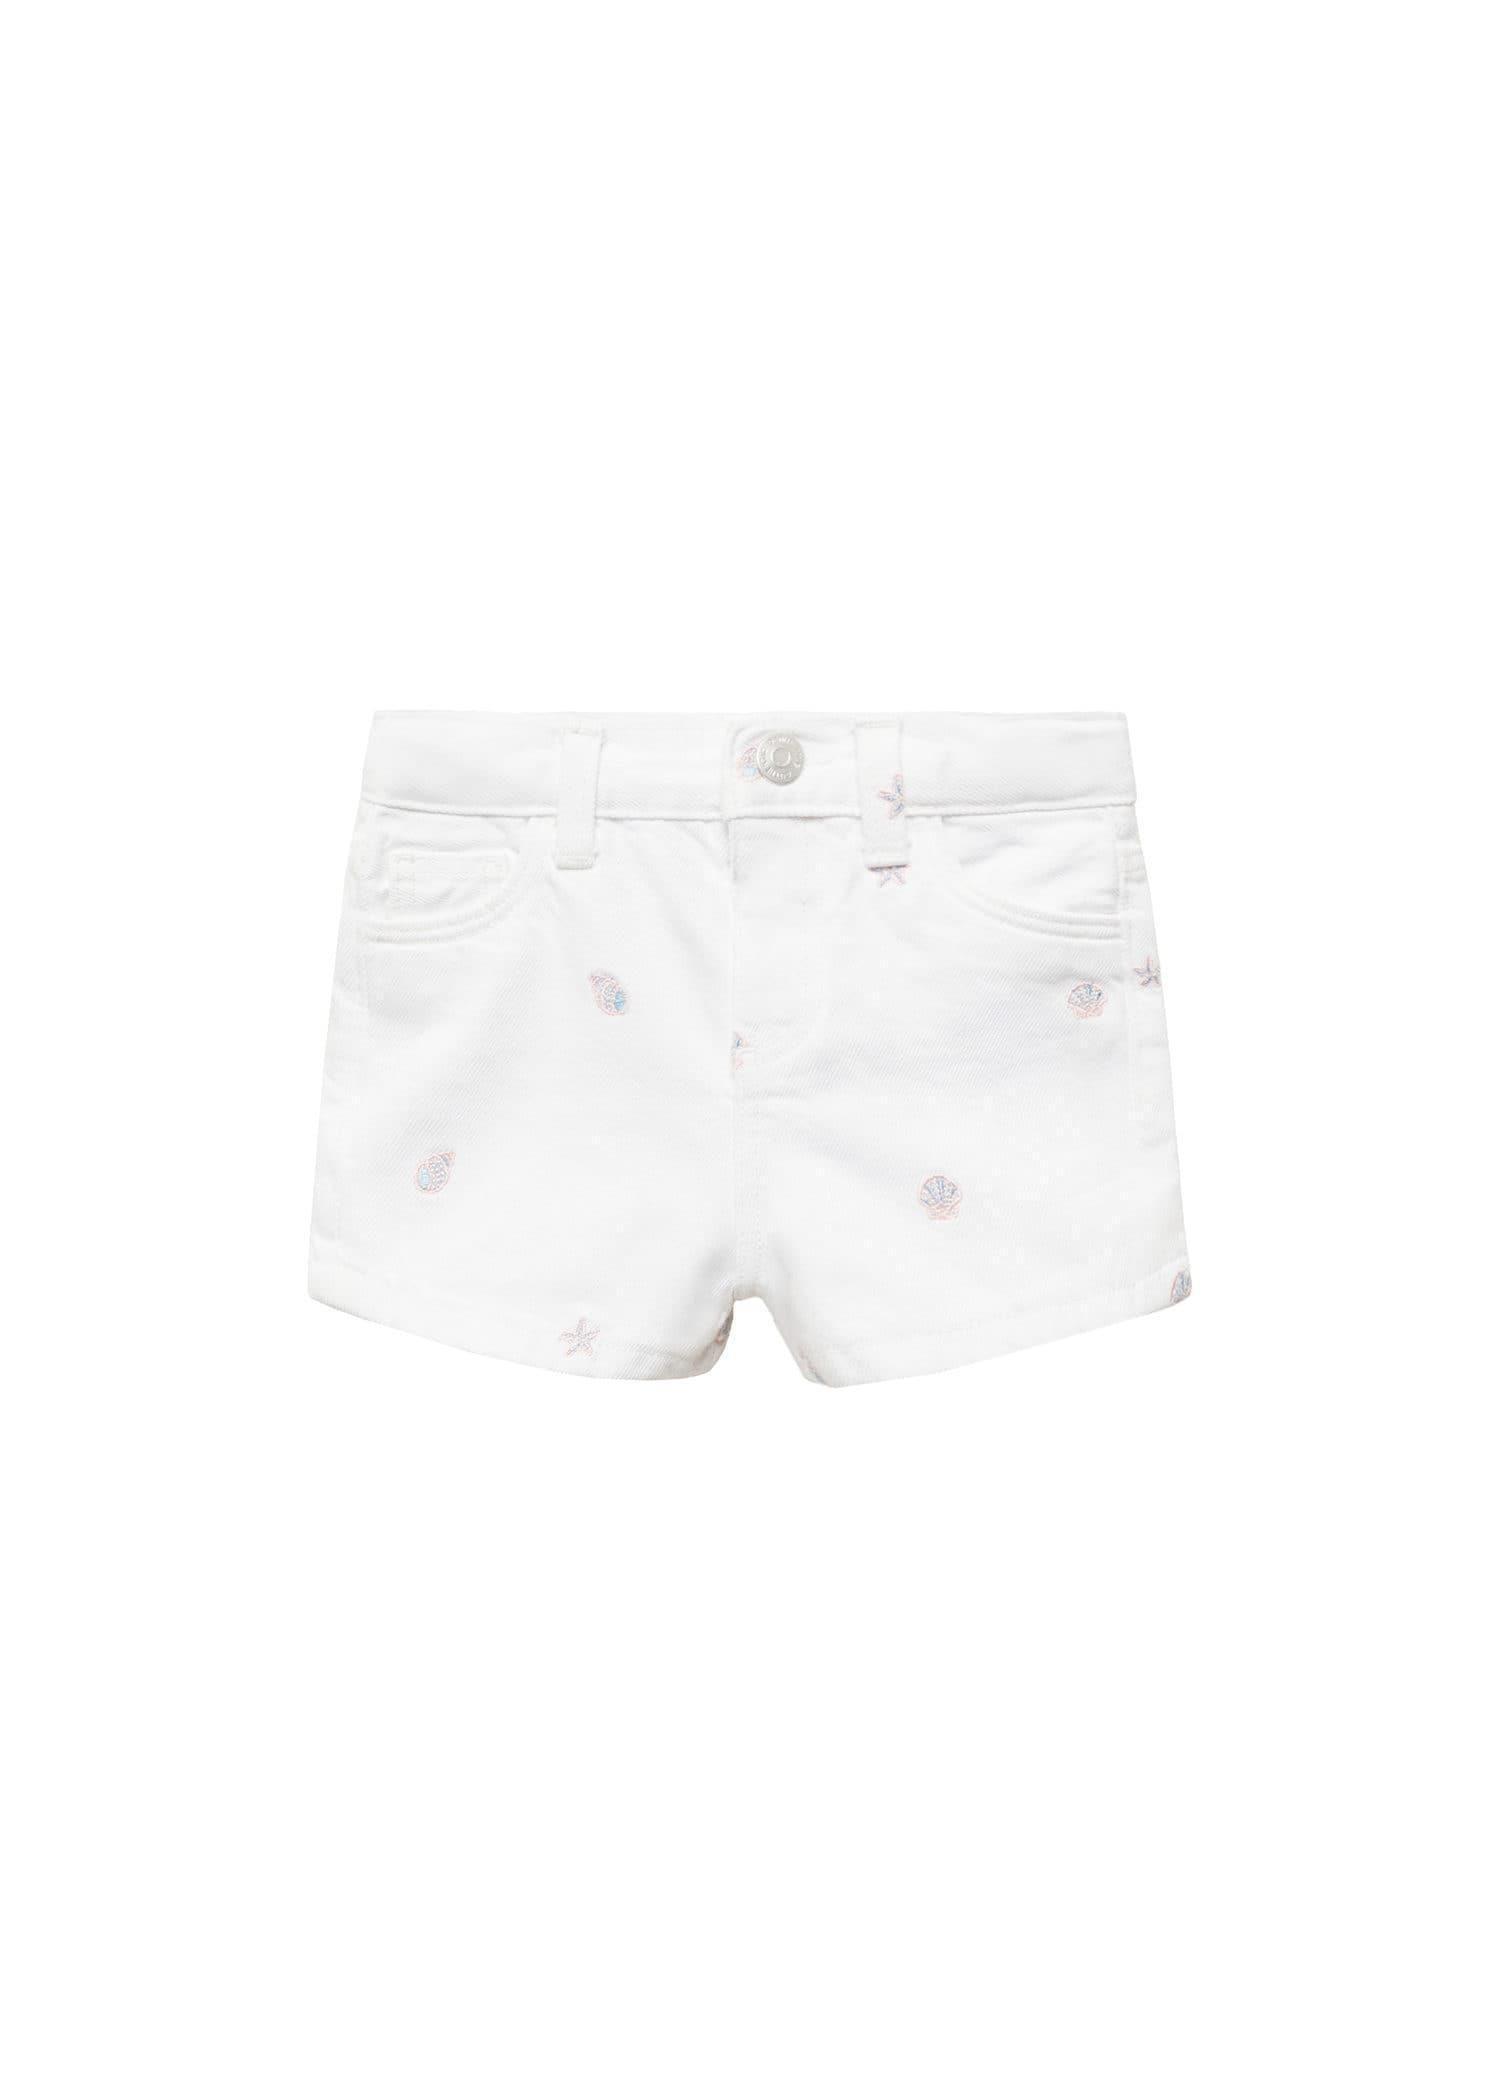 Mango - White Printed Denim Shorts, Kids Girls